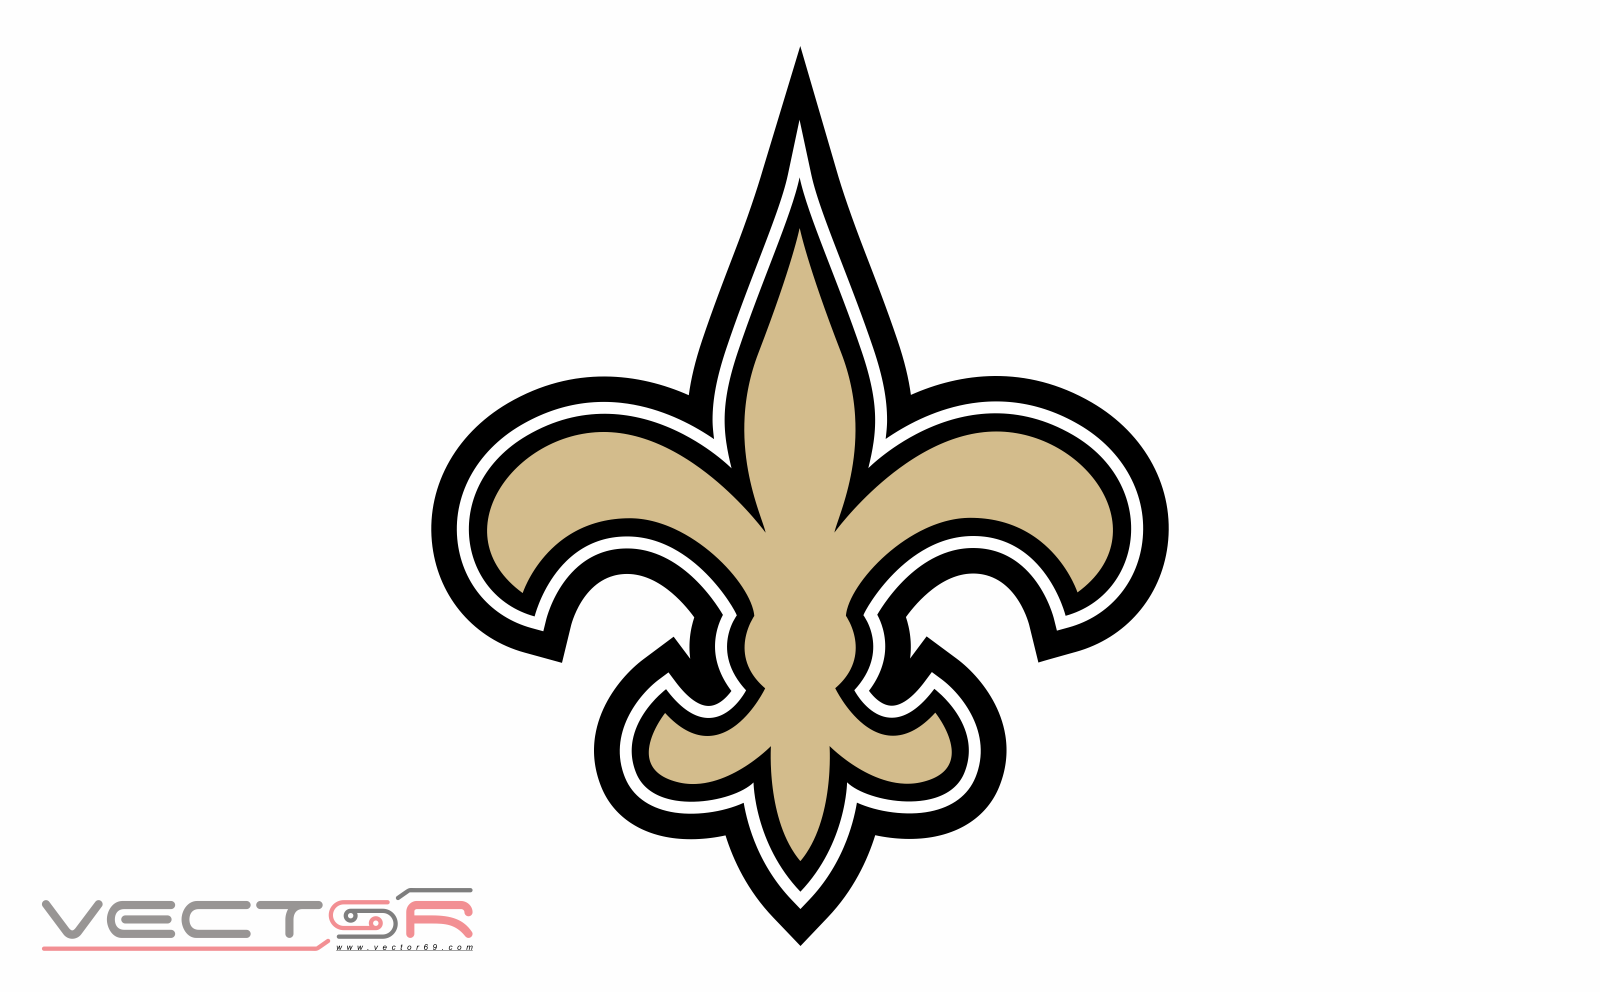 New Orleans Saints Logo (2012-present) - Download Transparent Images, Portable Network Graphics (.PNG)